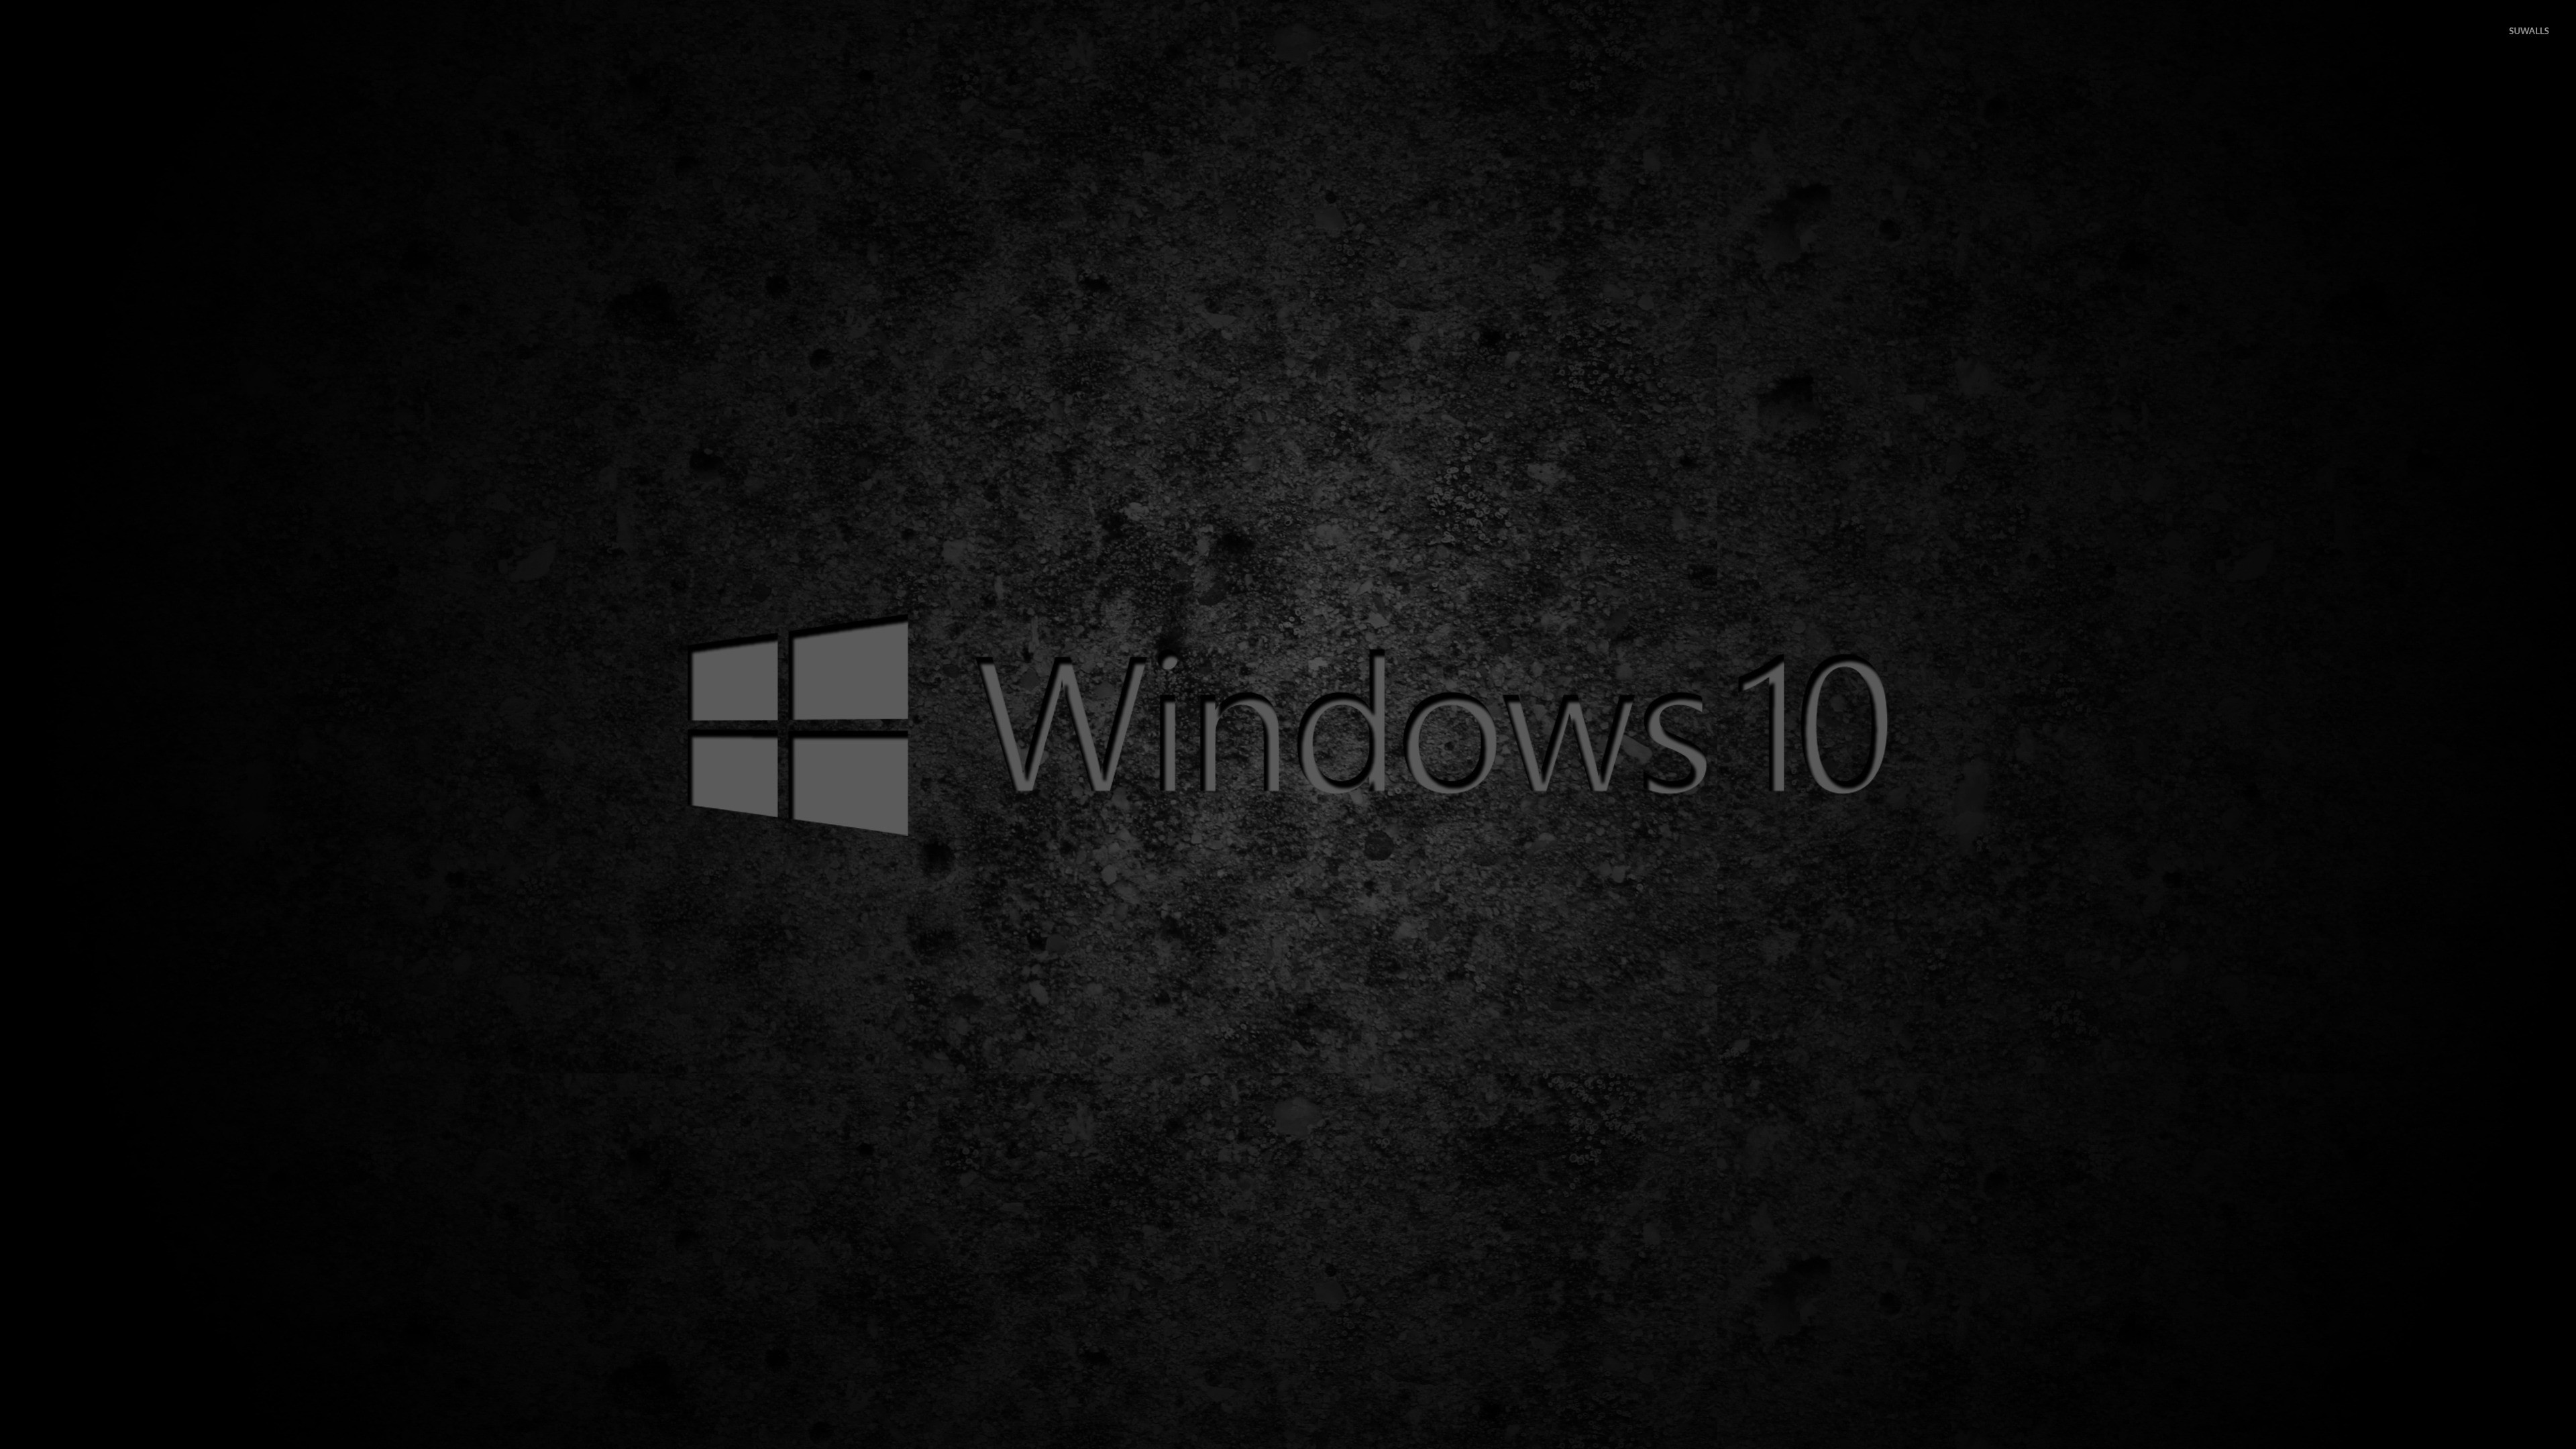 3840x2160 Windows 10 gray text logo on concrete wallpaper